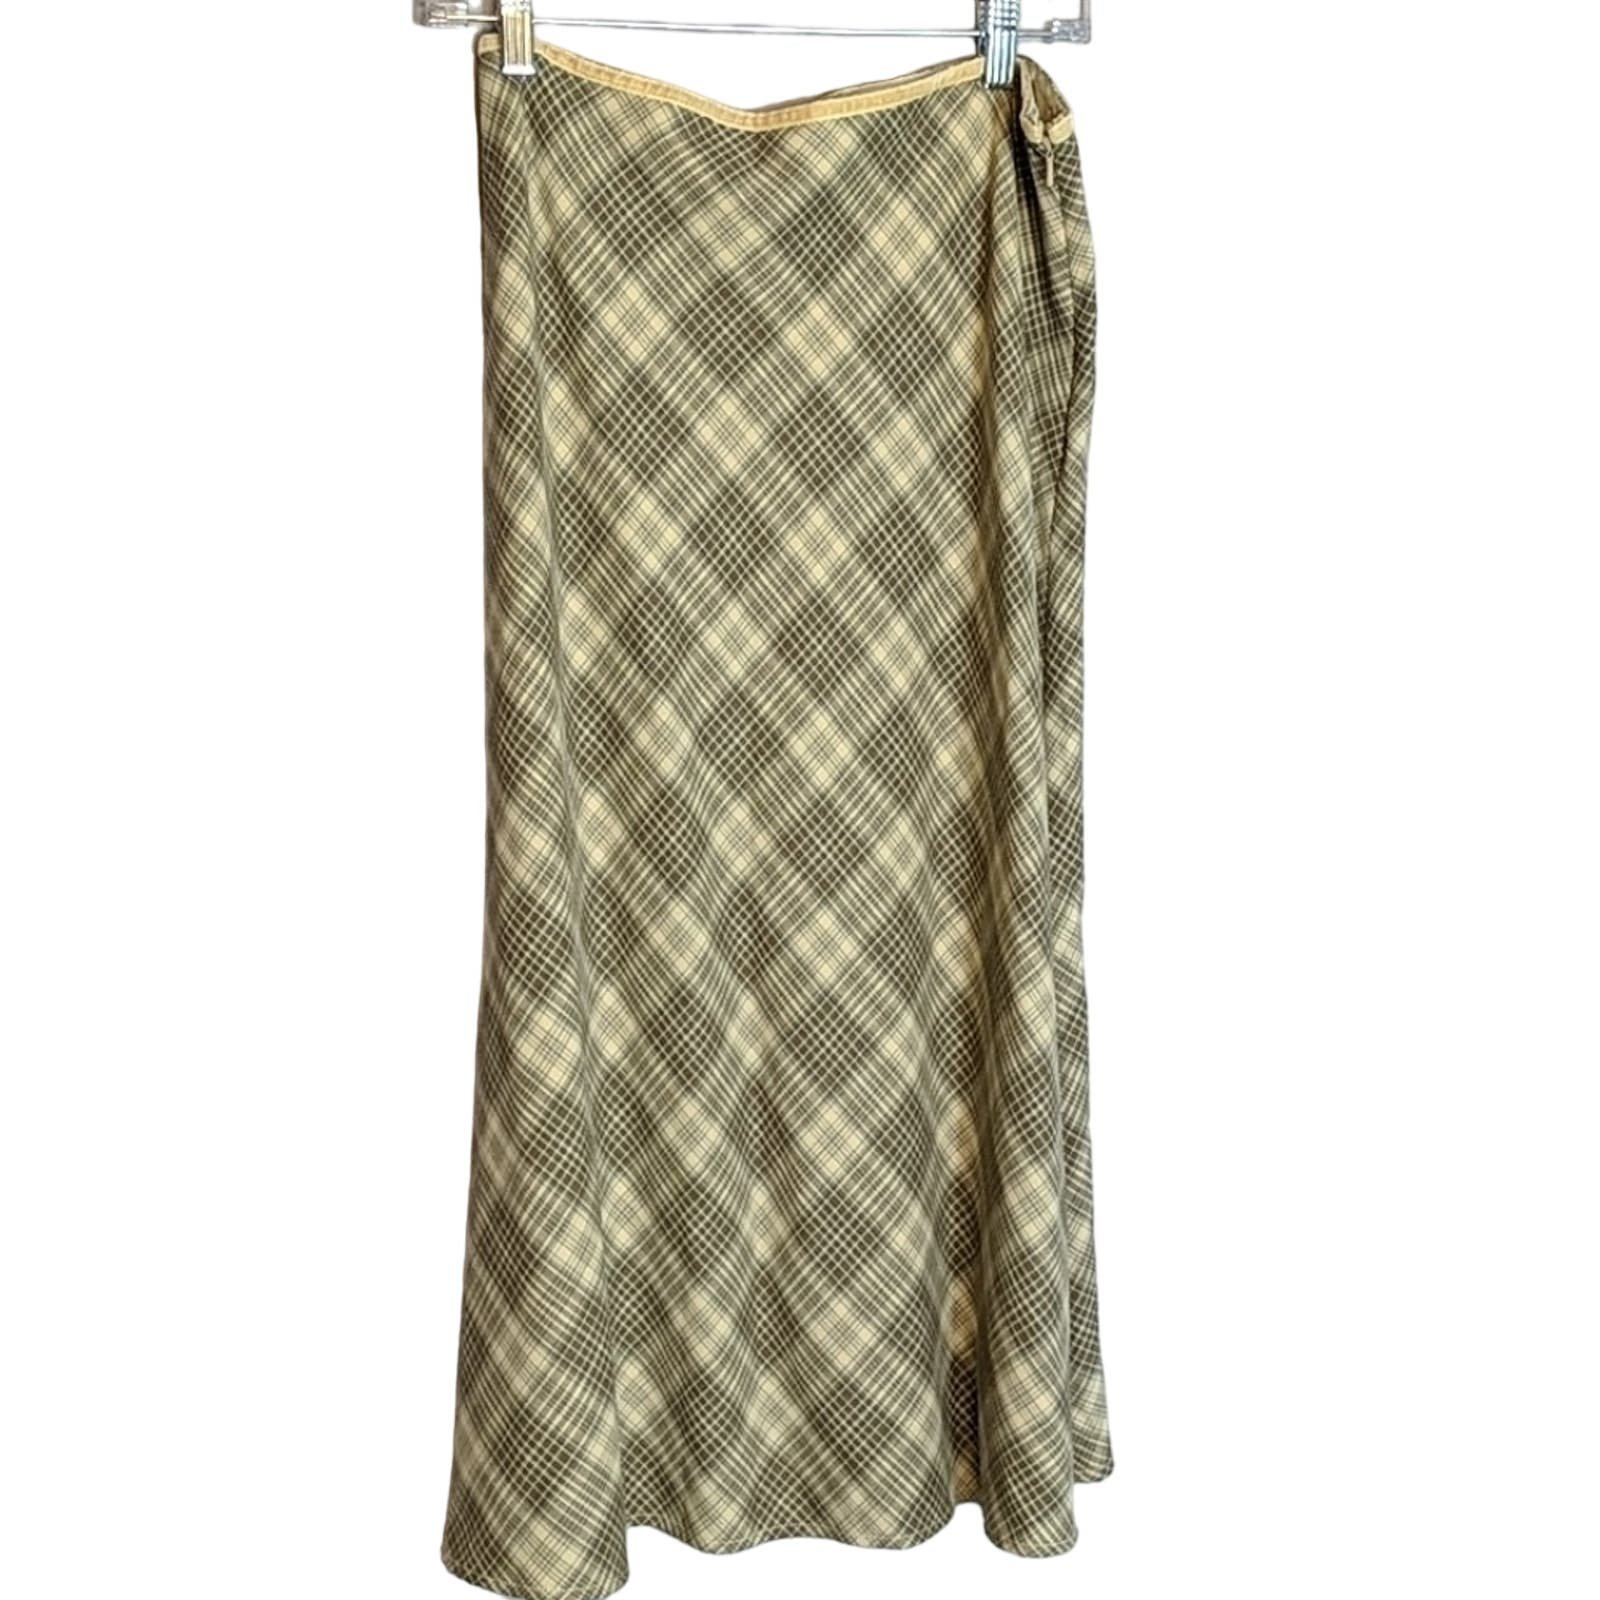 Buy Eddie Bauer Wool Blend Plaid Skirt, 14P FkG5sZIQO S